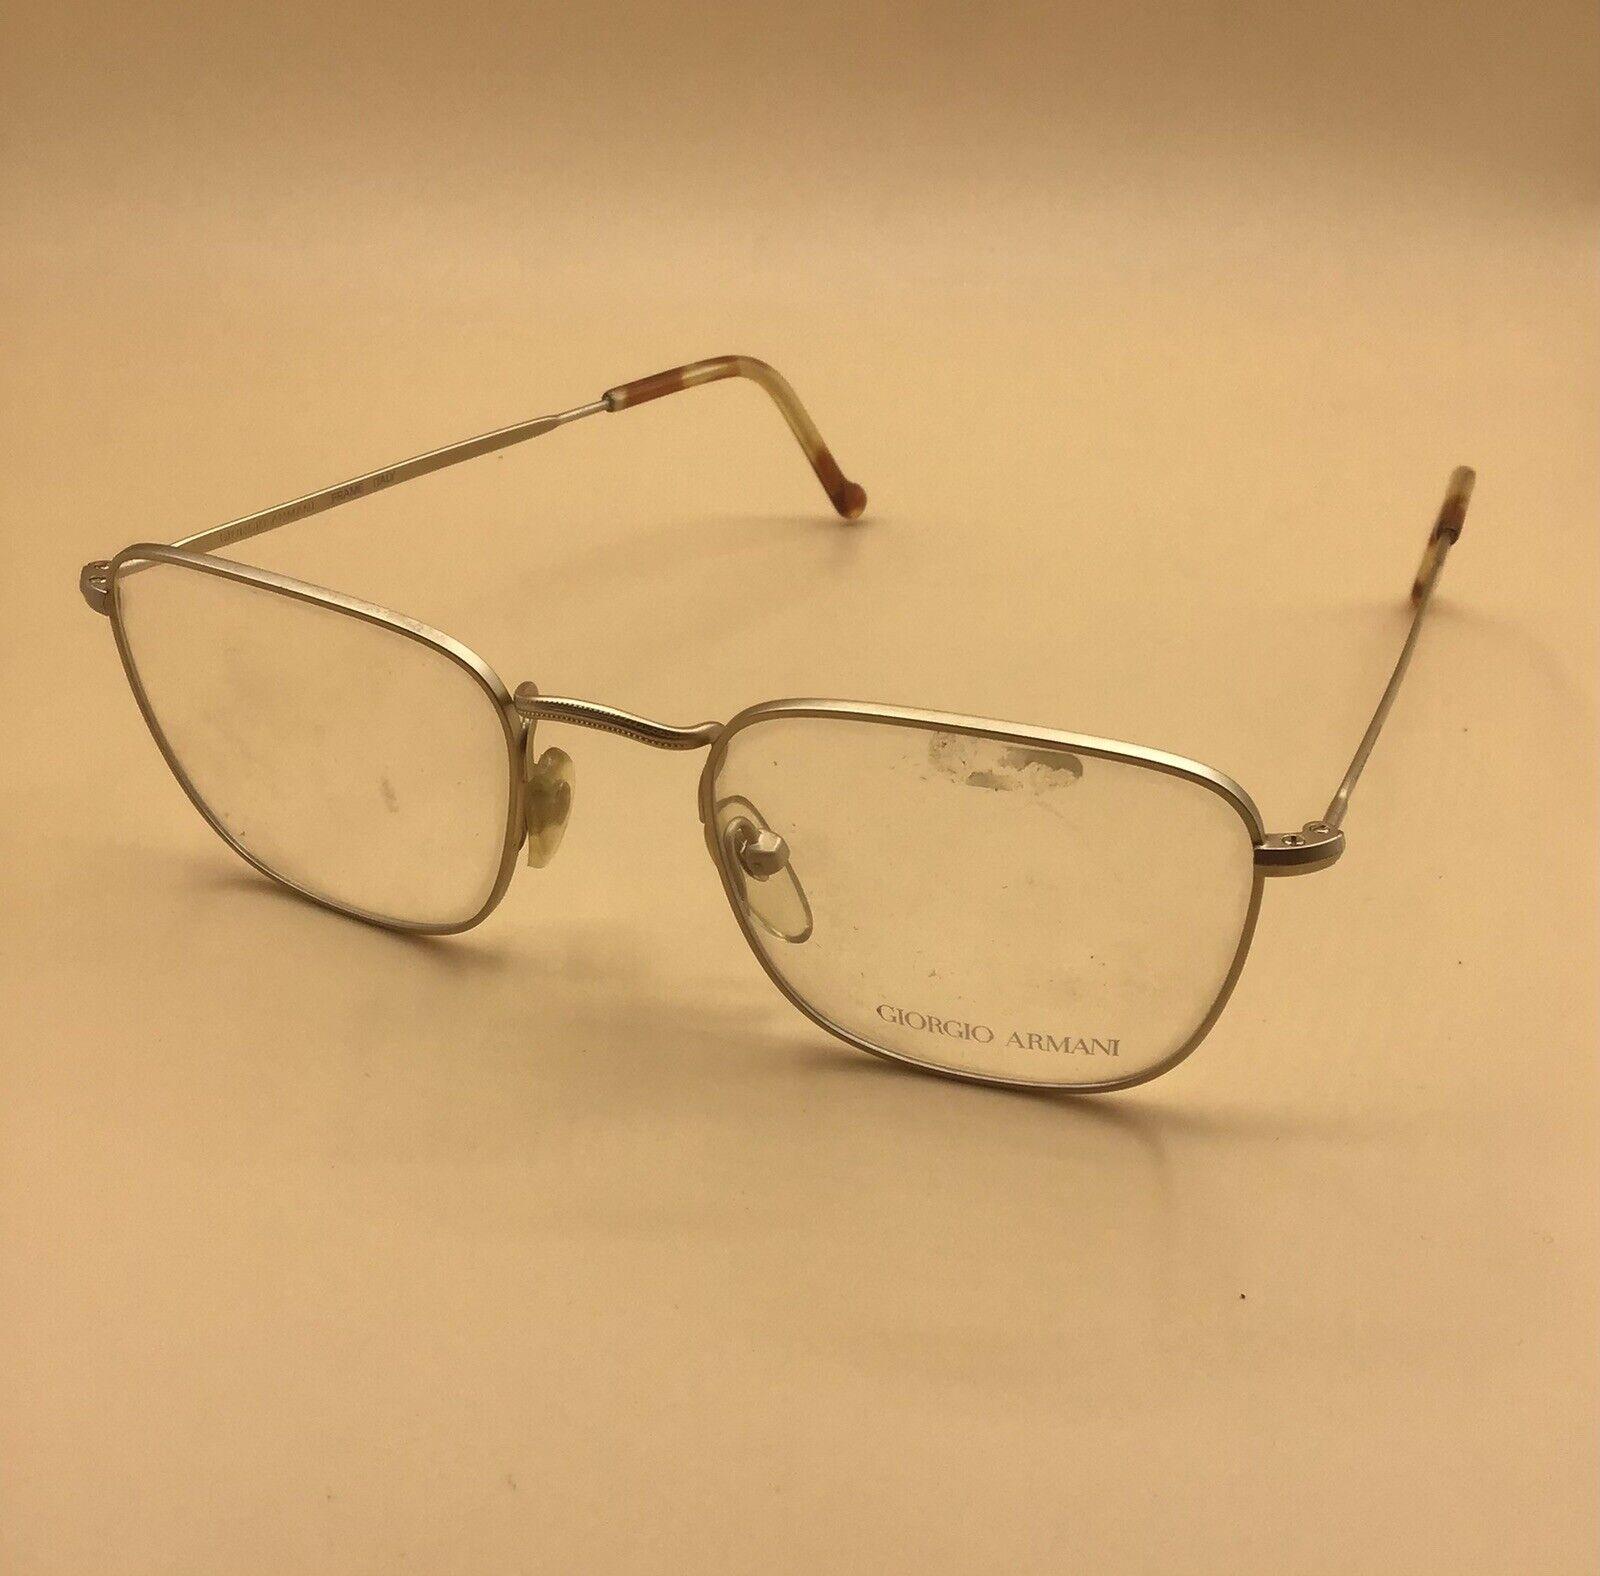 Giorgio Armani Occhiale Vintage Eyewear Frame Brillen Lunettes 137 703